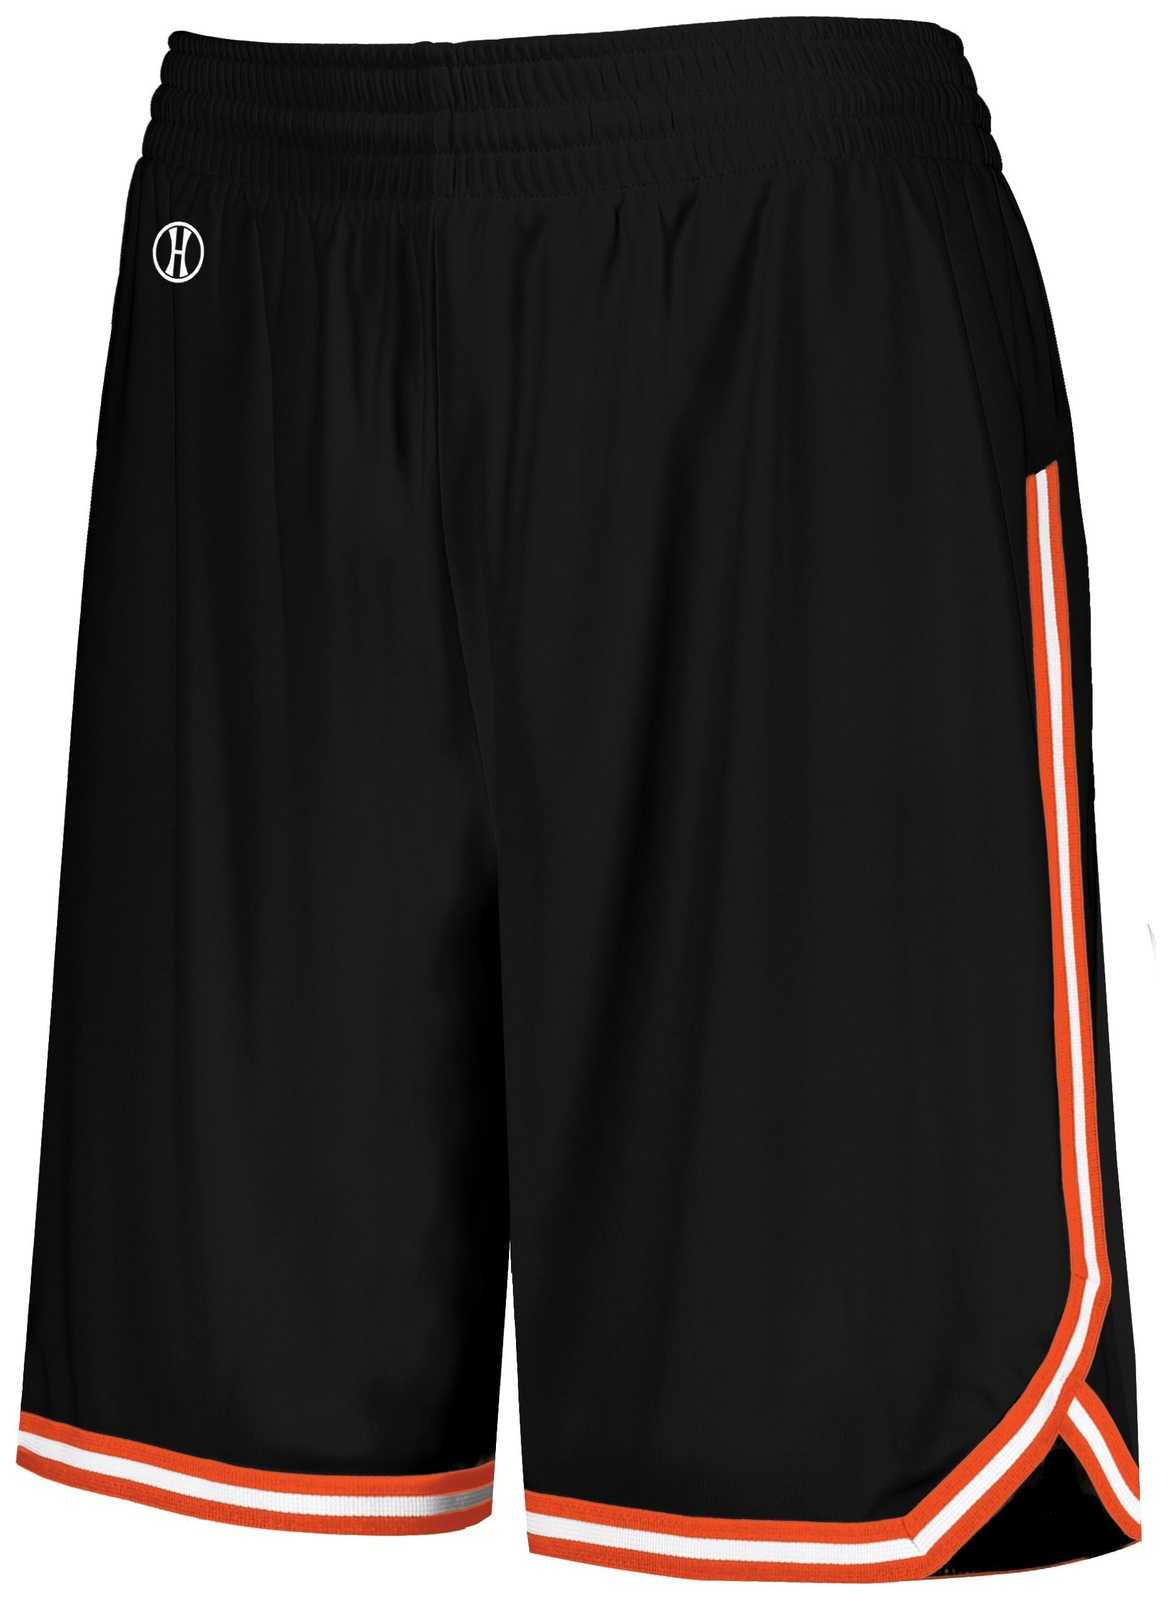 Holloway 224377 Ladies Retro Basketball Shorts - Black Orange White - HIT a Double